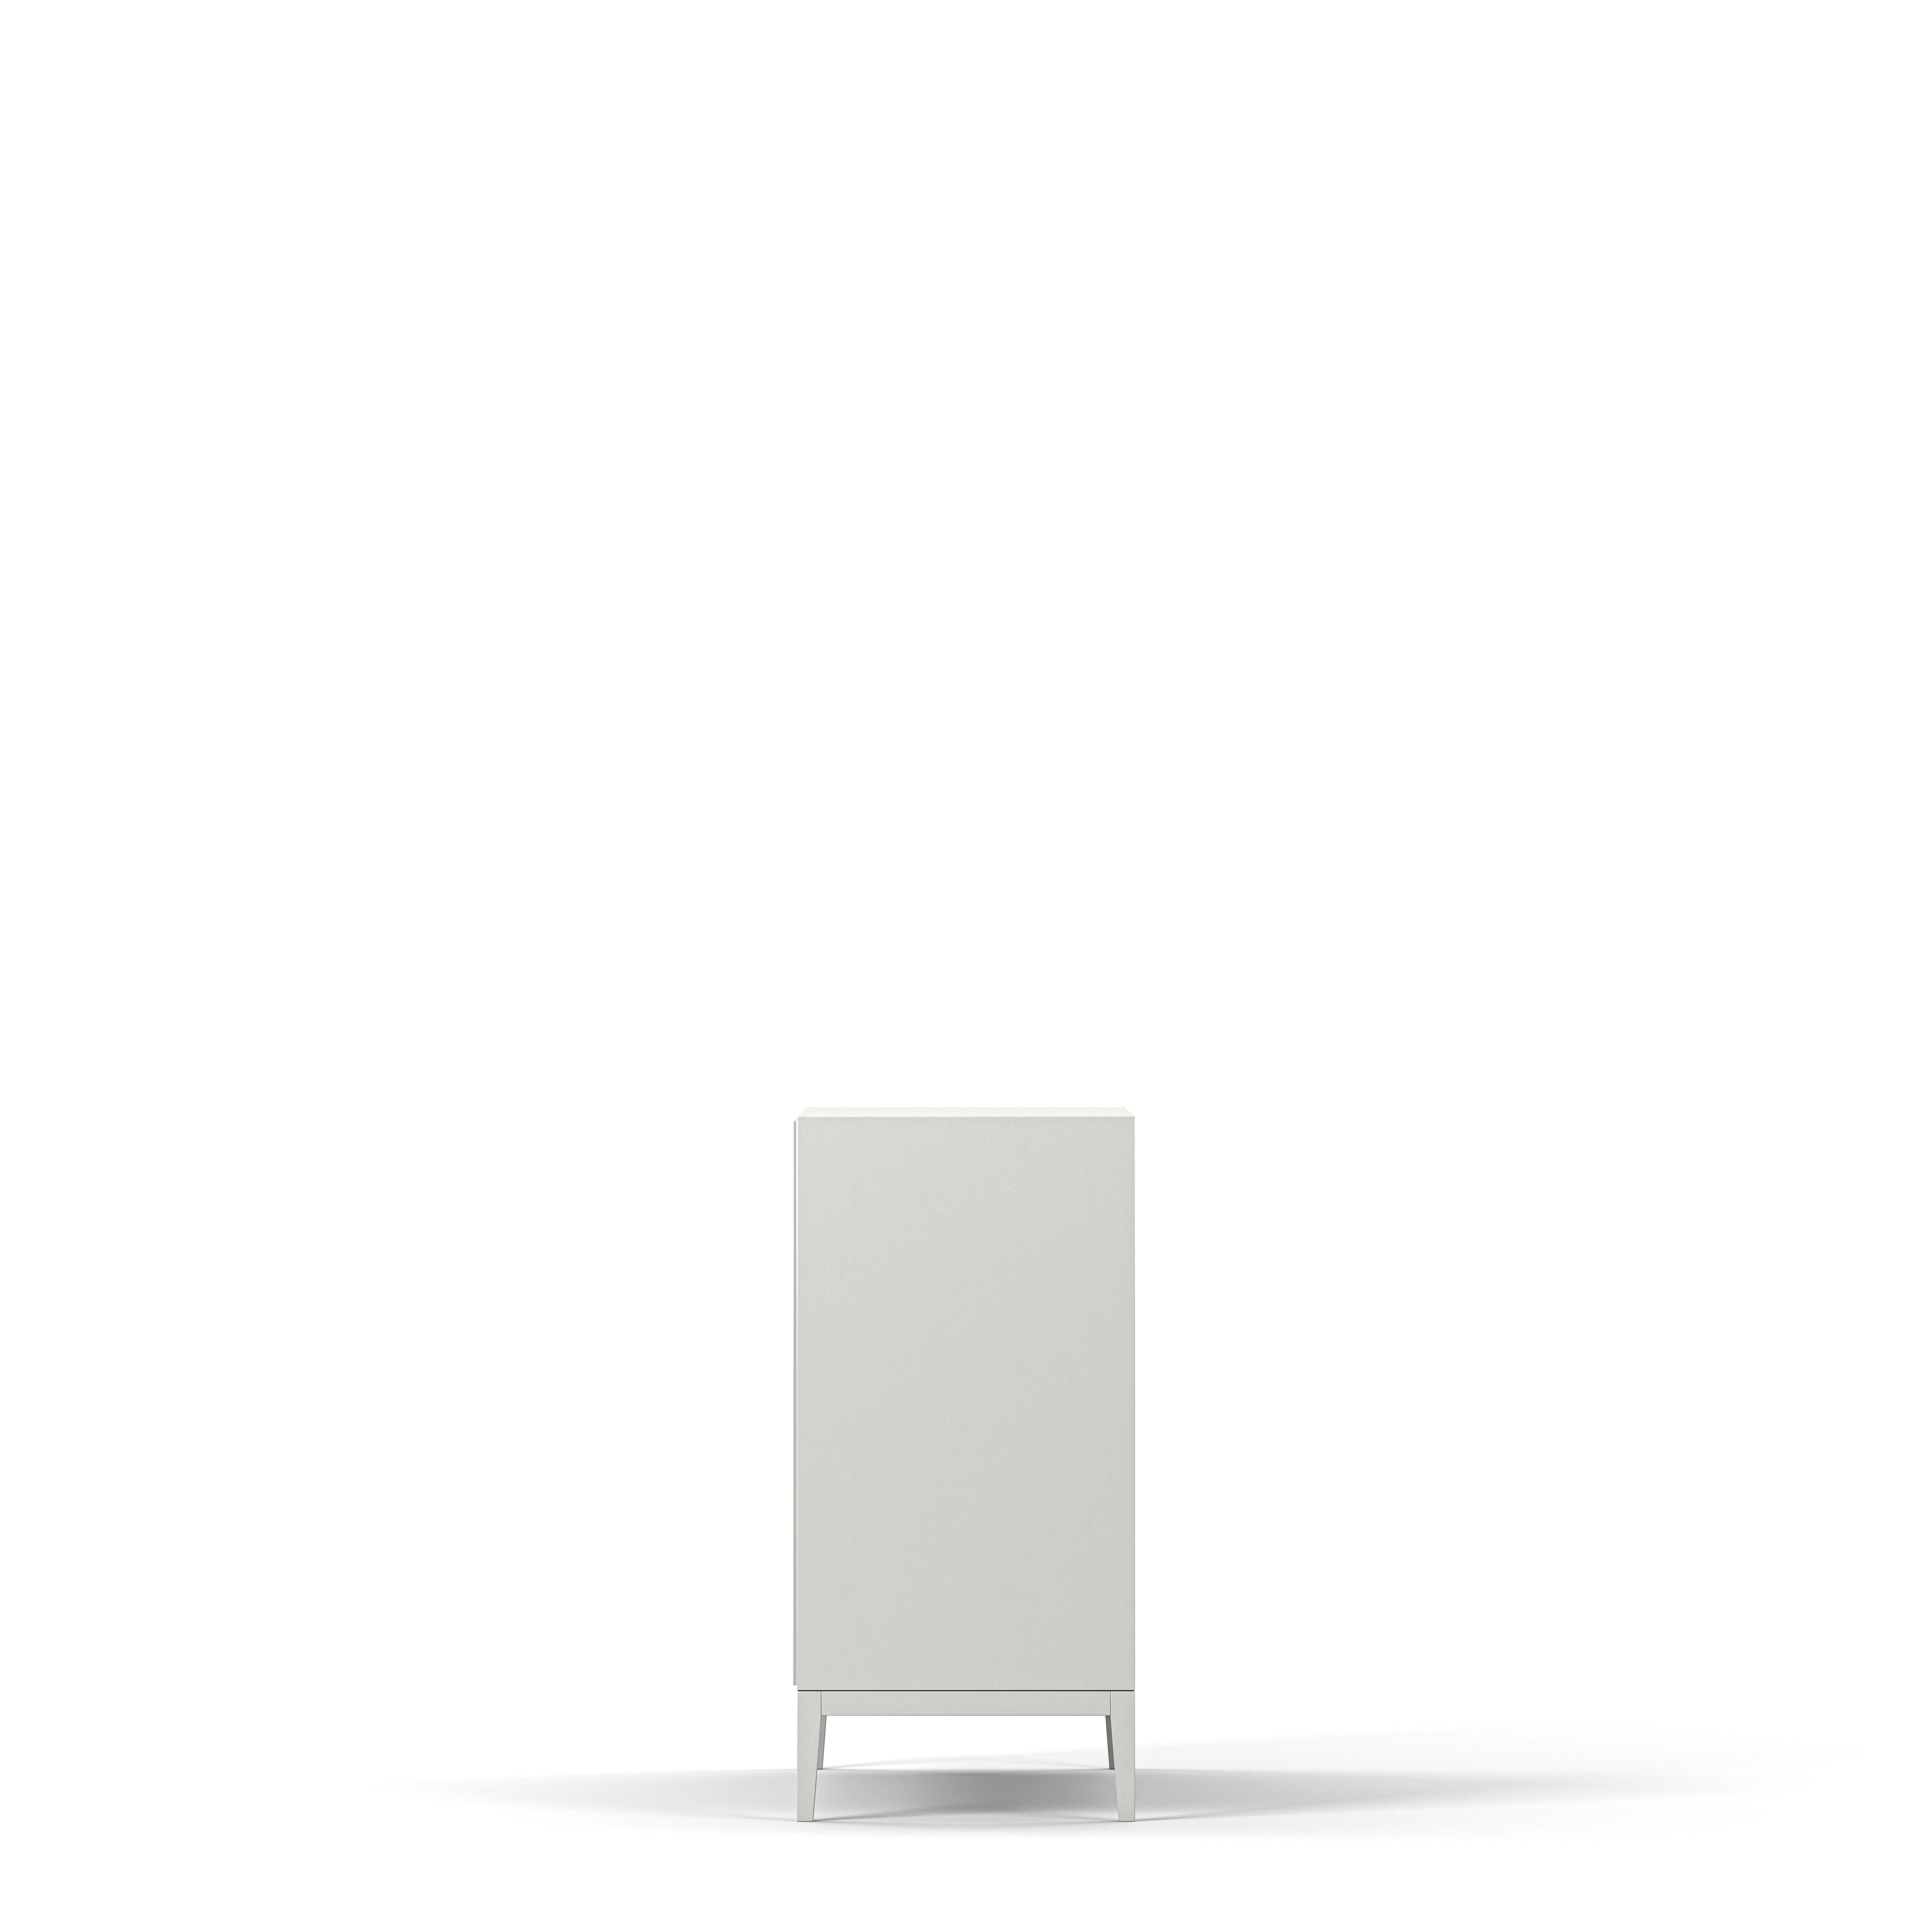 Englesson Skänkar Edge 2.0 Skänk 3 Dörrar, High #färg_White  #Colour_White 